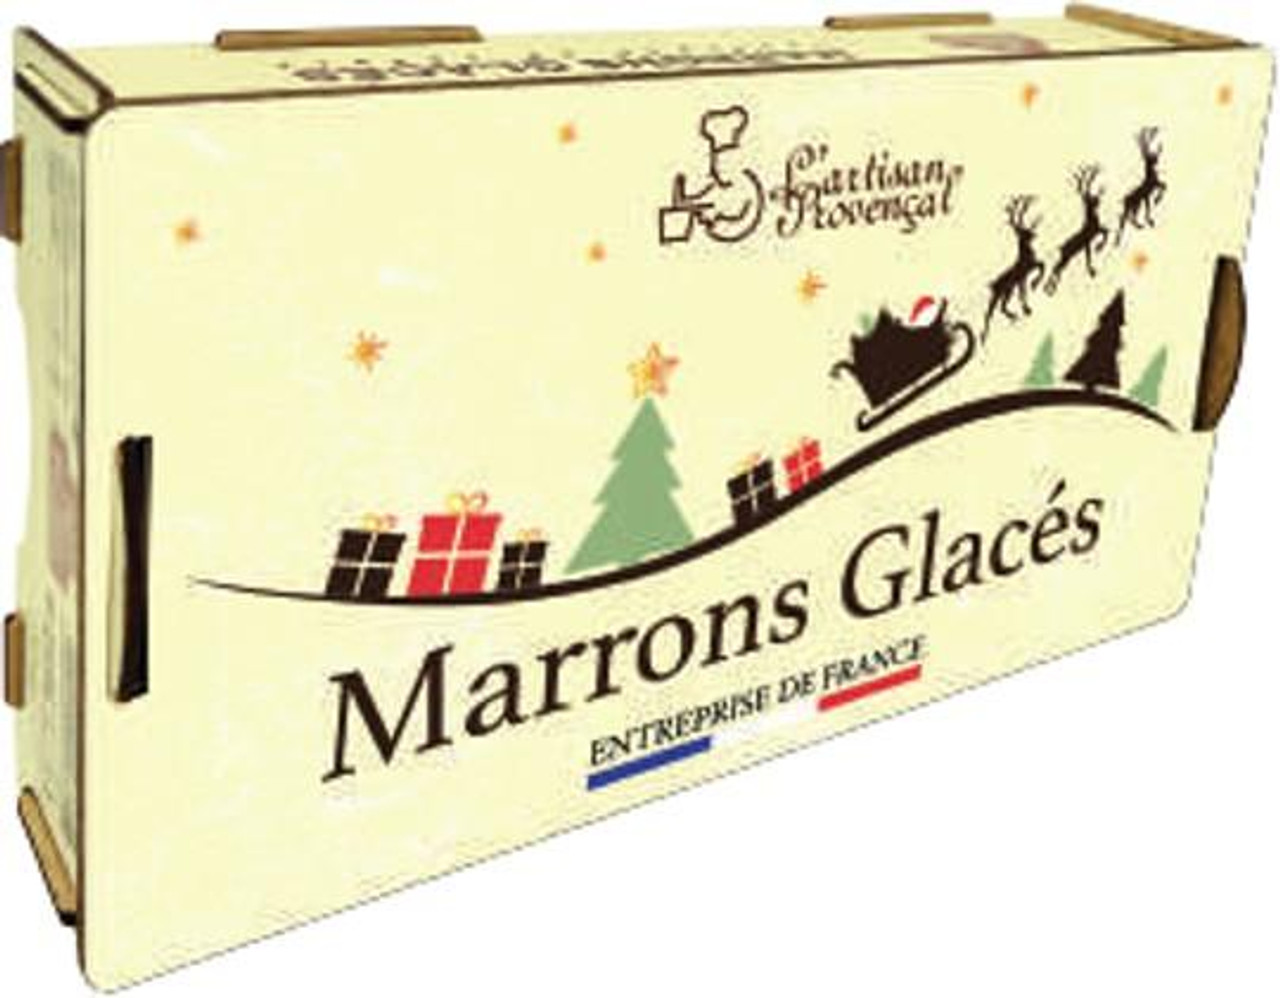 Marrons Glacés Recipe, Candies